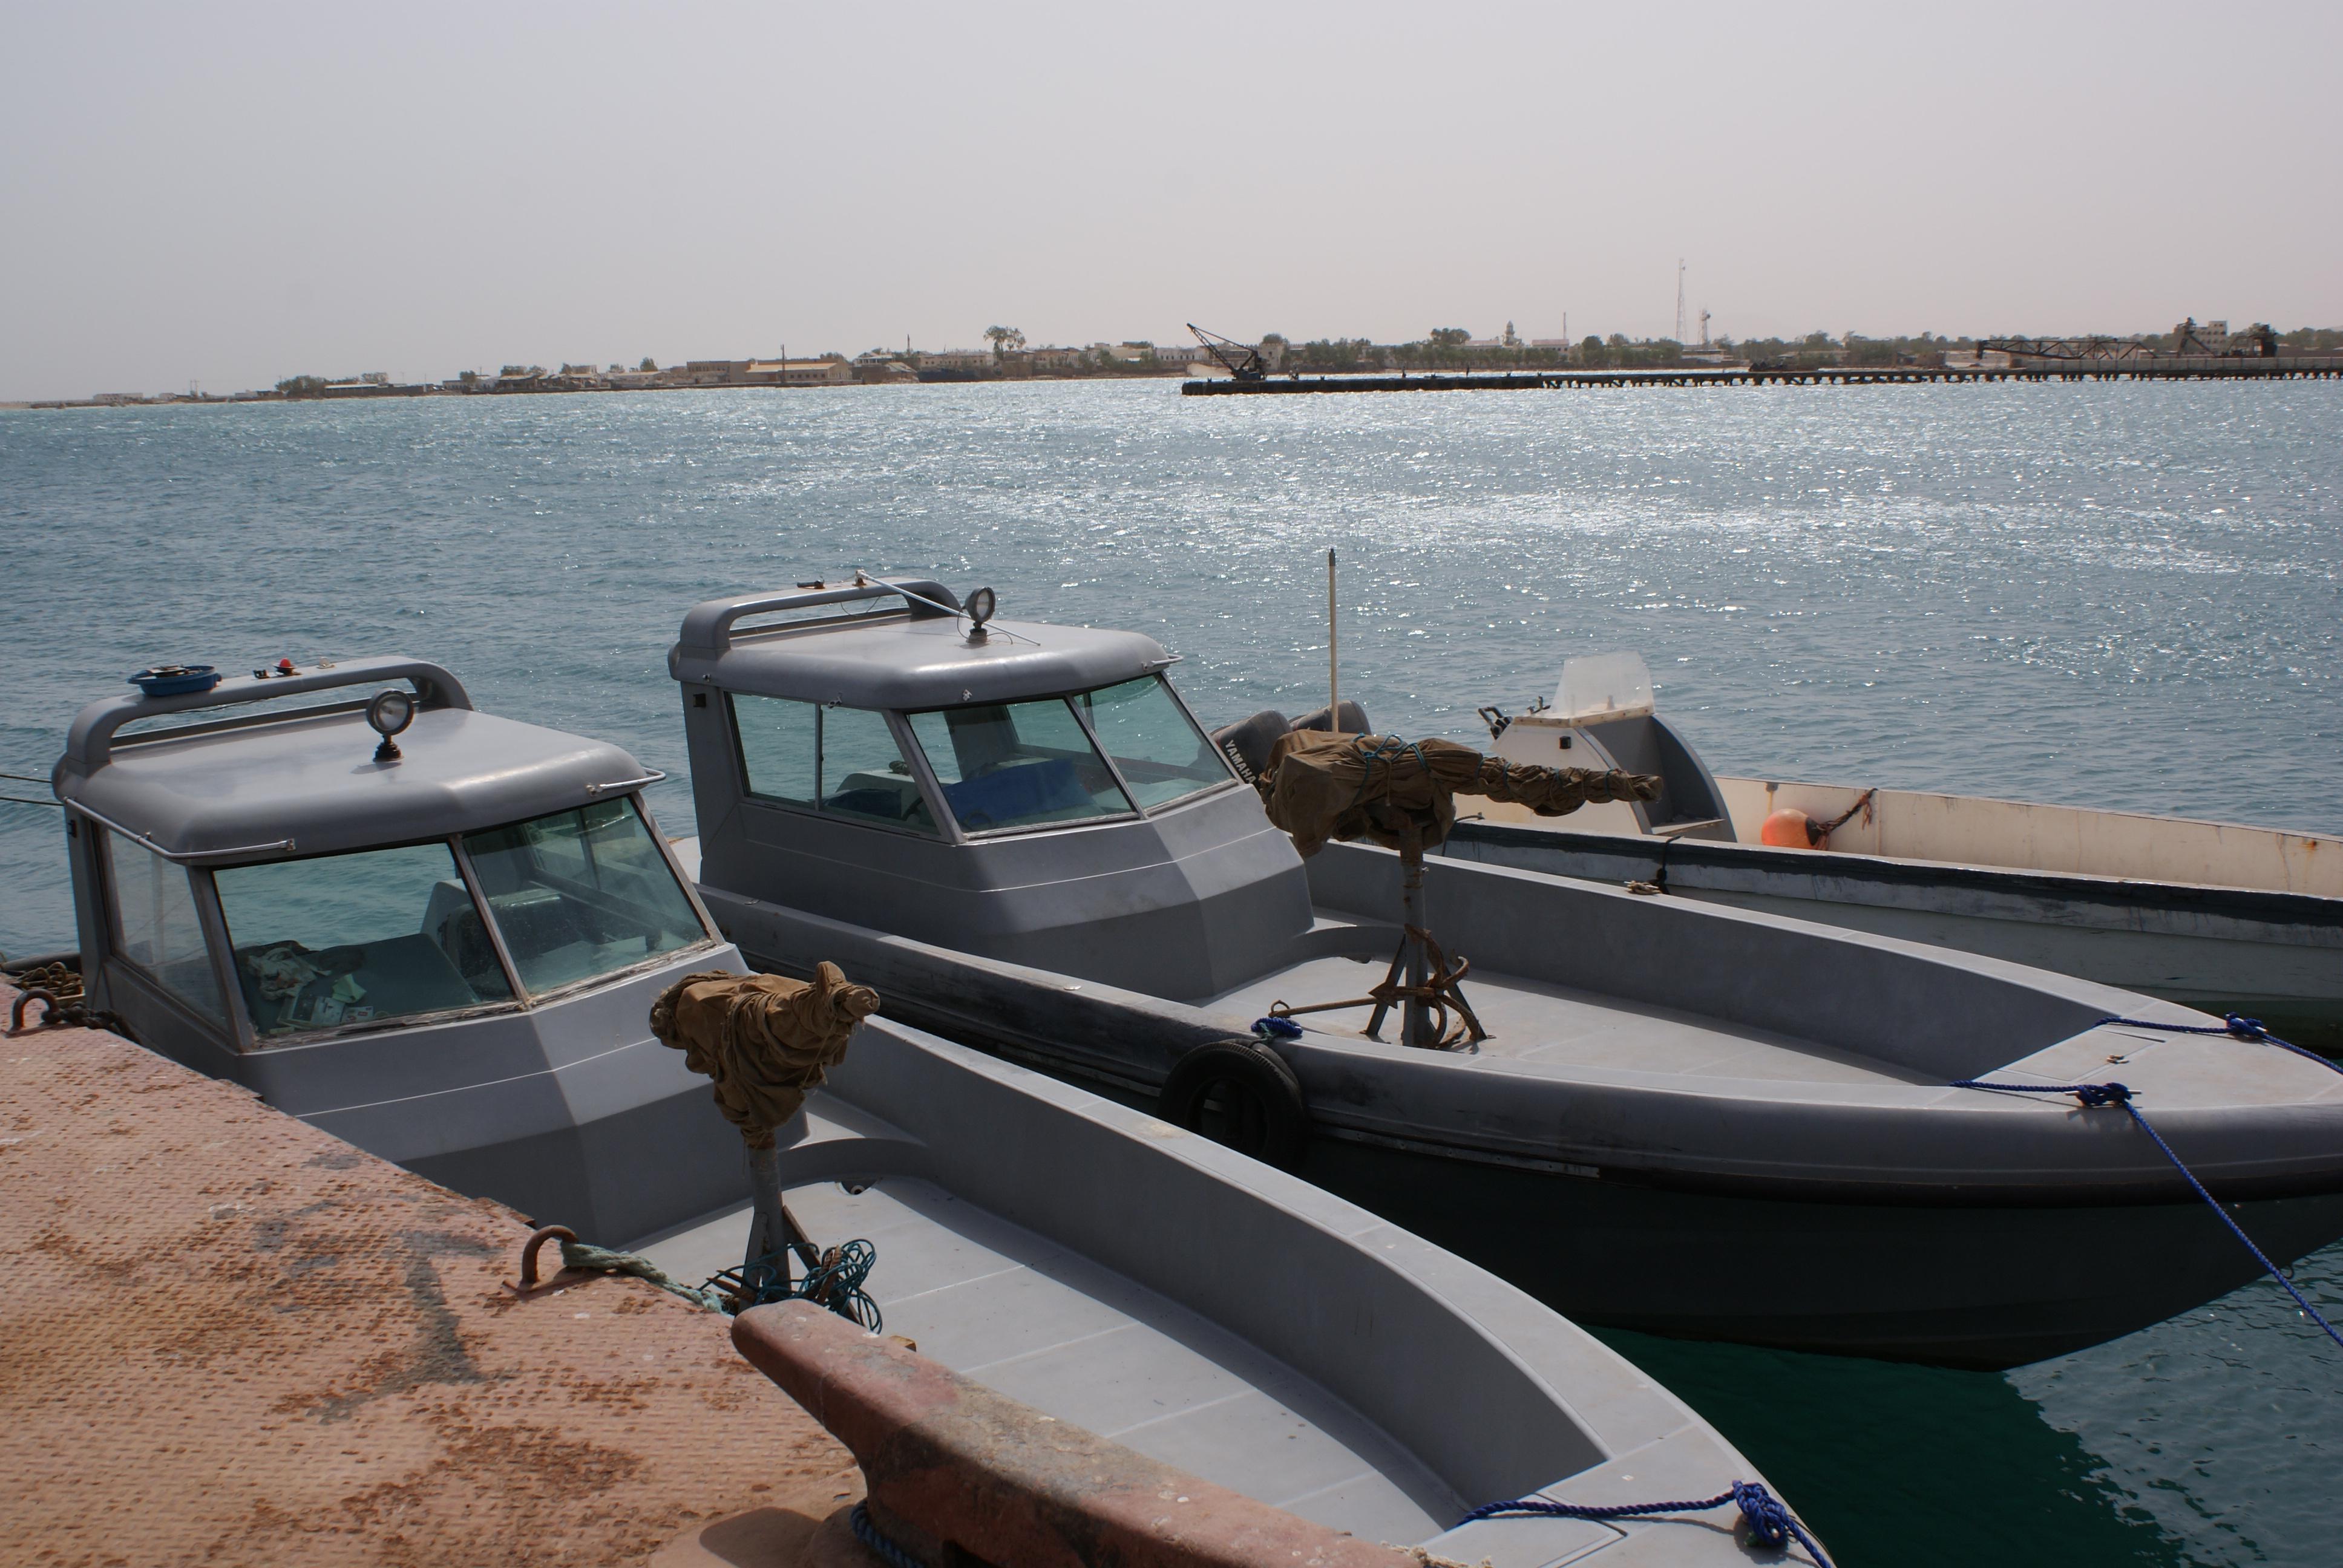 Patrol boats with Deck Mounted Vladimirov KPV Heavy Machine Guns